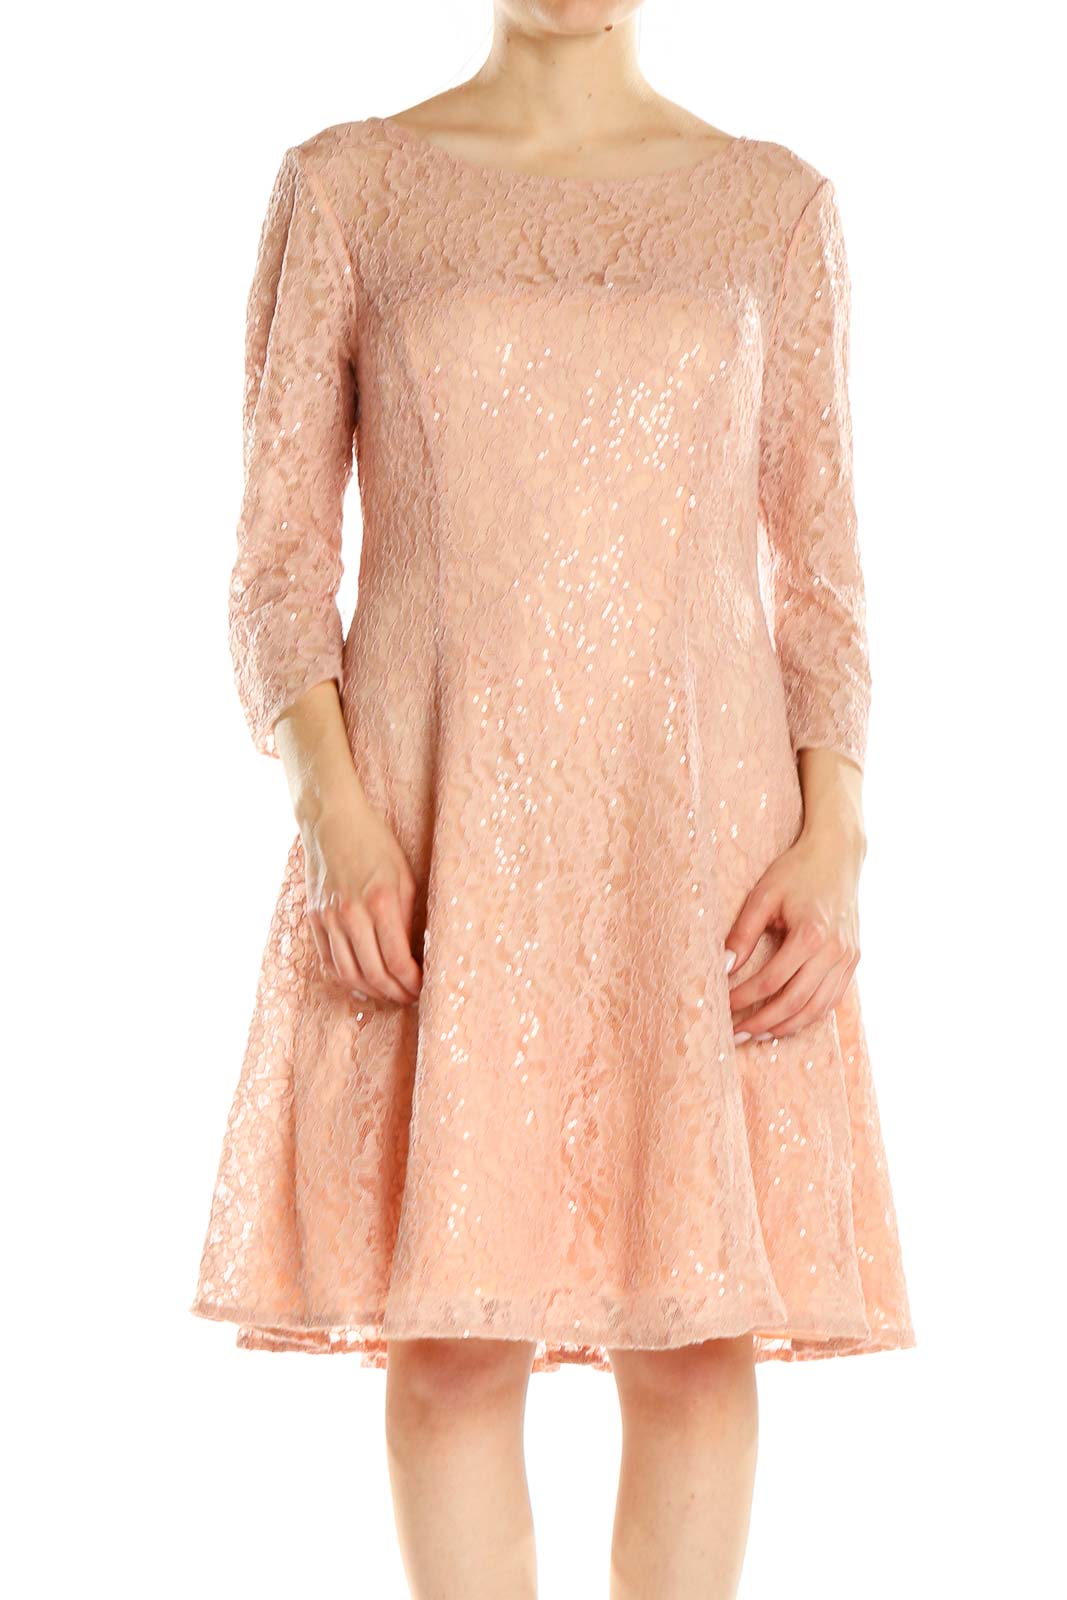 Pink Lace A-Line Dress Front